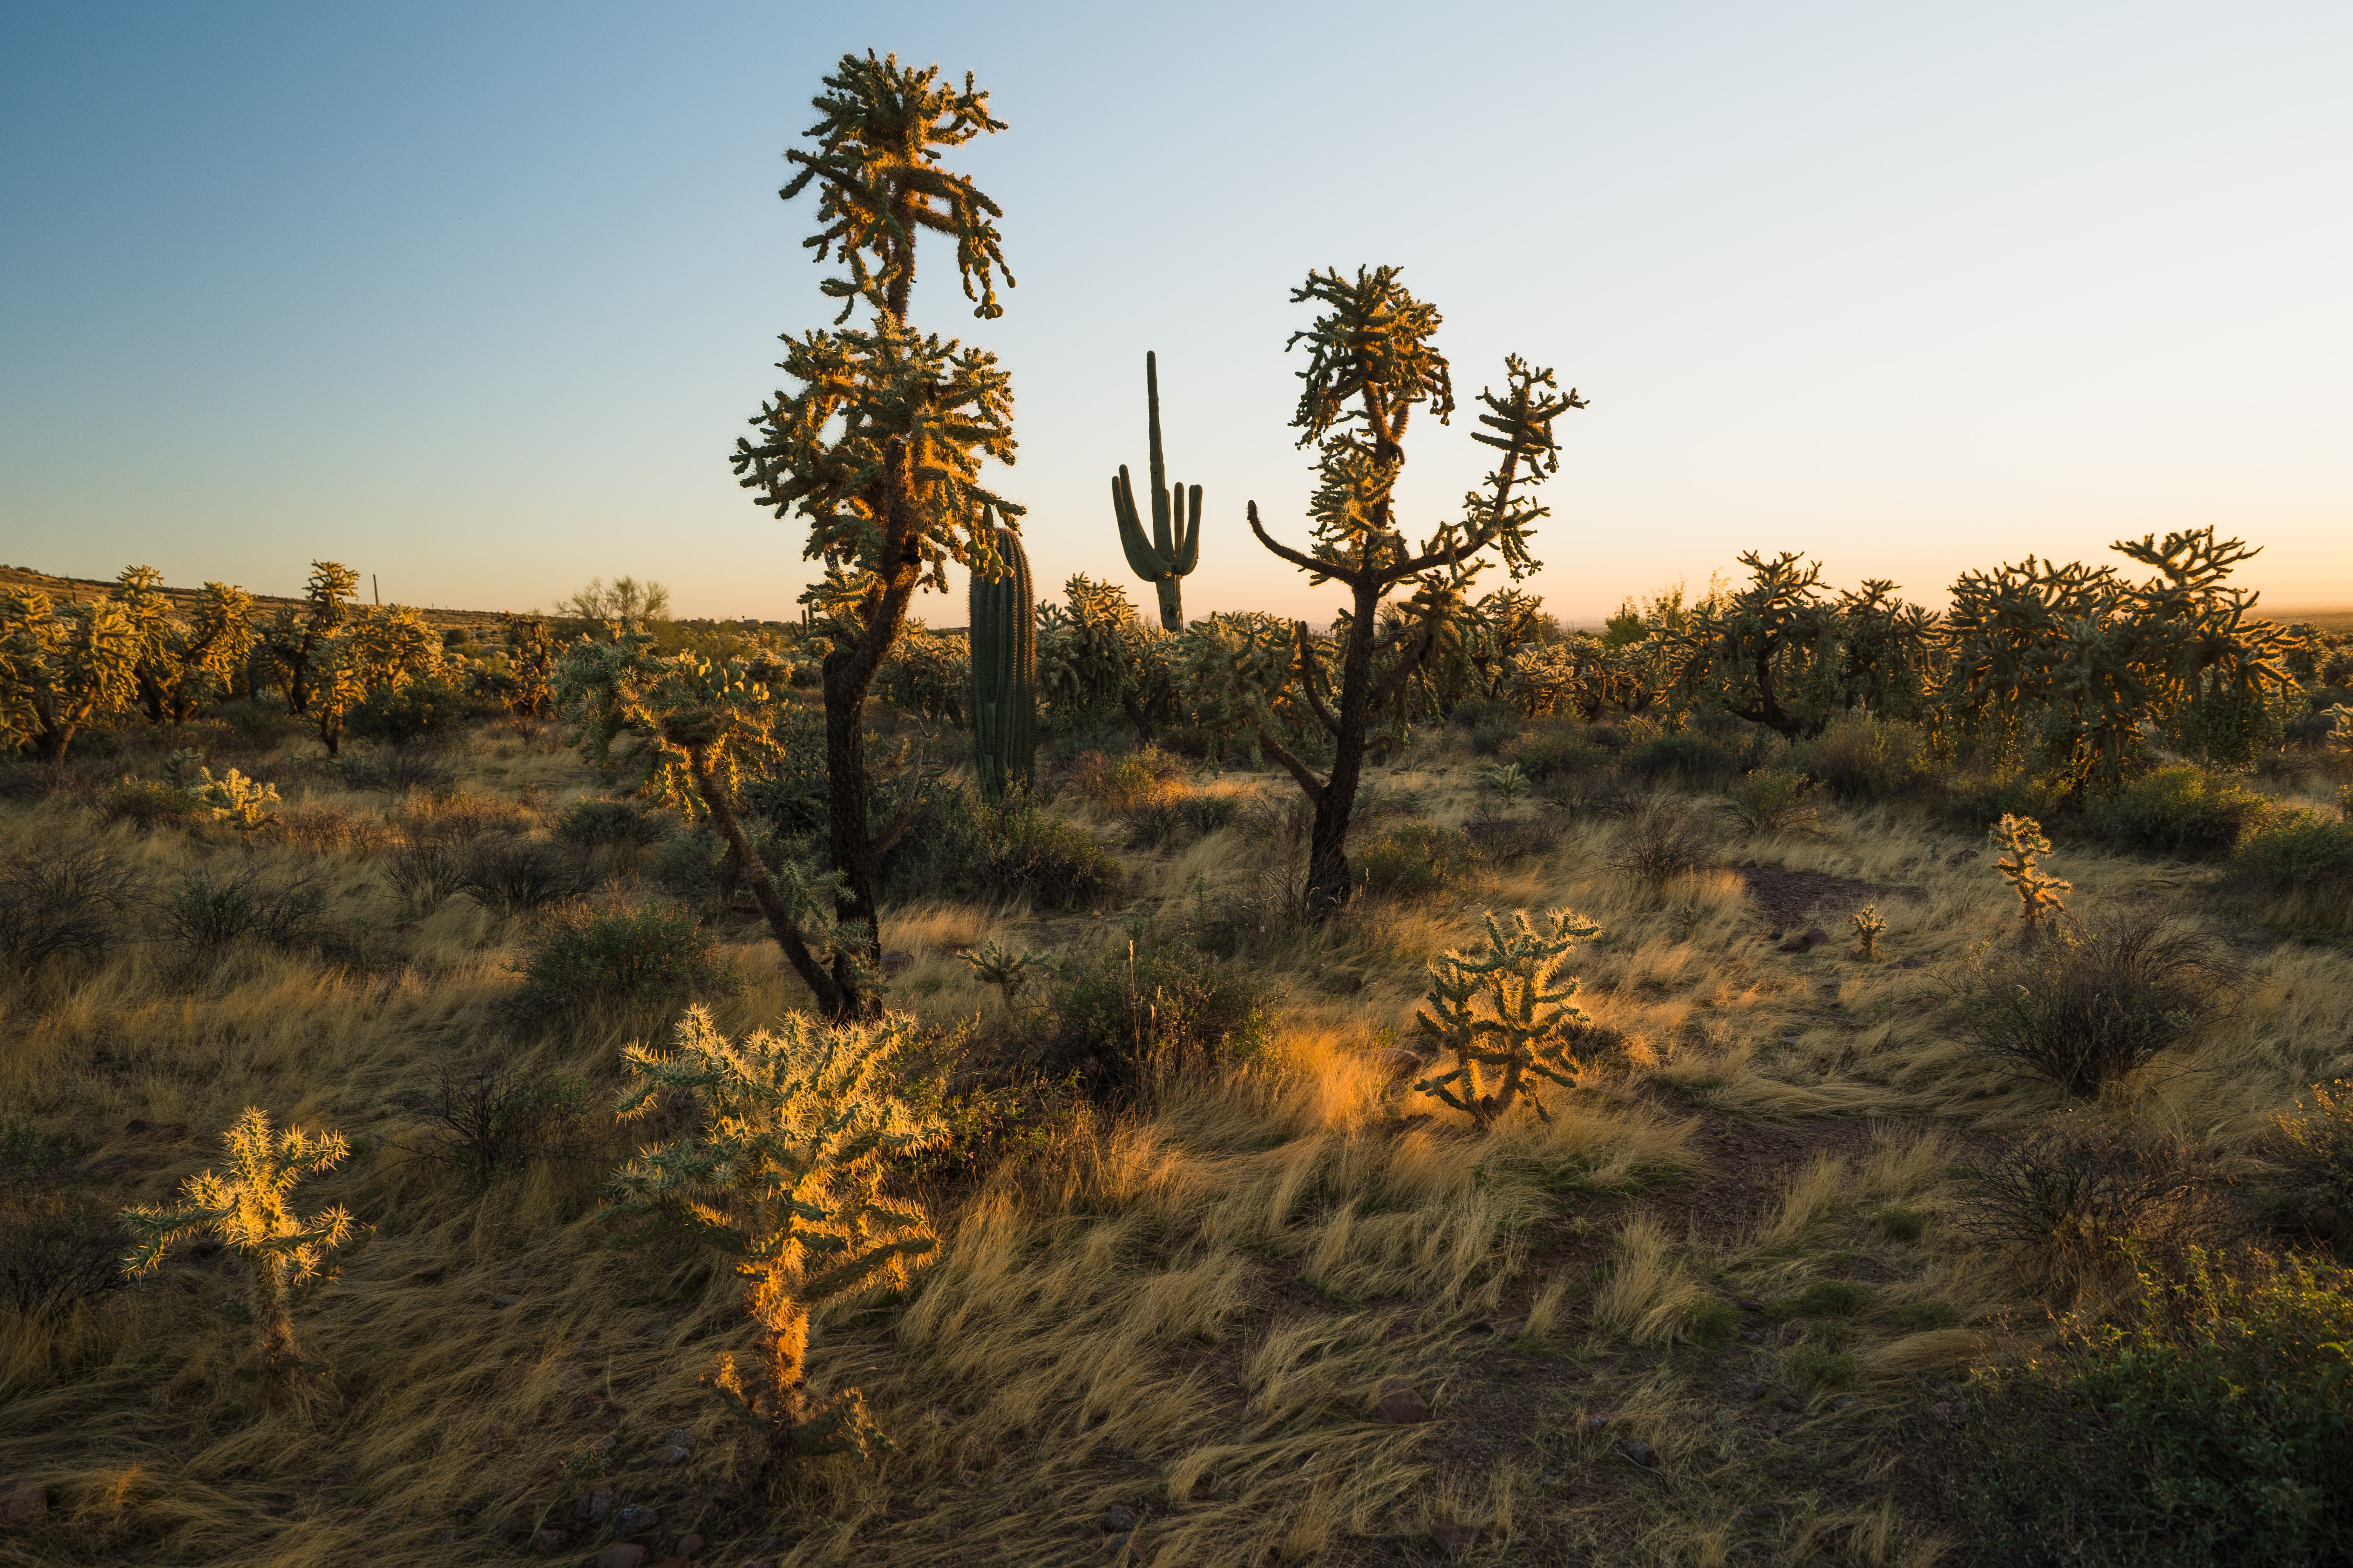 Photo by Riley Bregar  |  The setting sun's golden glow illuminates recognizable flora of the Sonoran Desert.